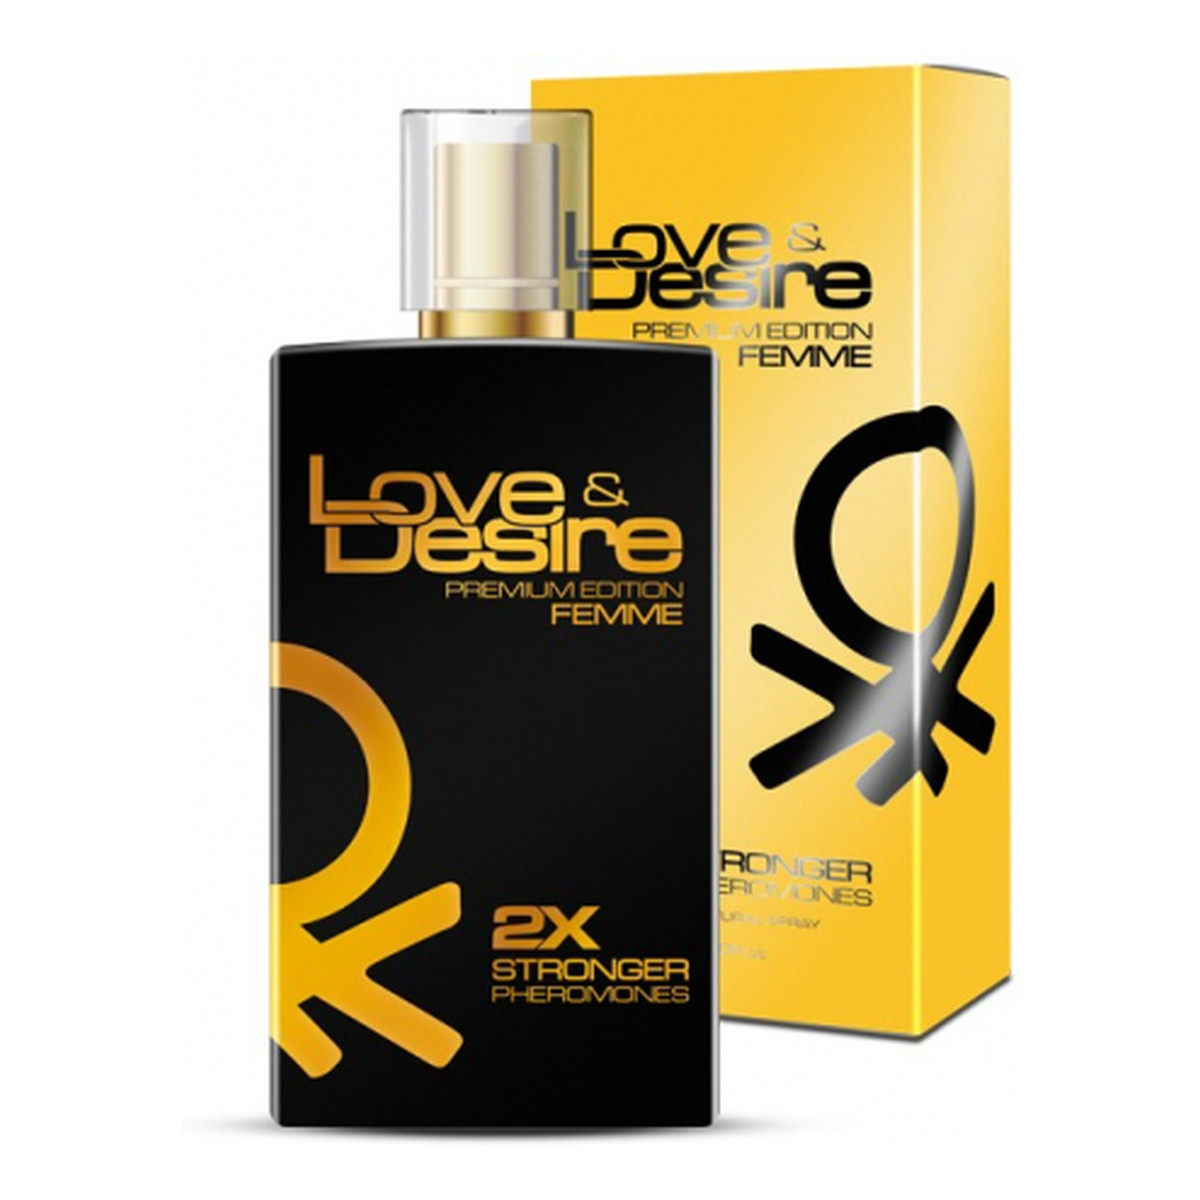 Love & Desire Premium edition femme 2x stronger pheromones feromony dla kobiet spray 100ml